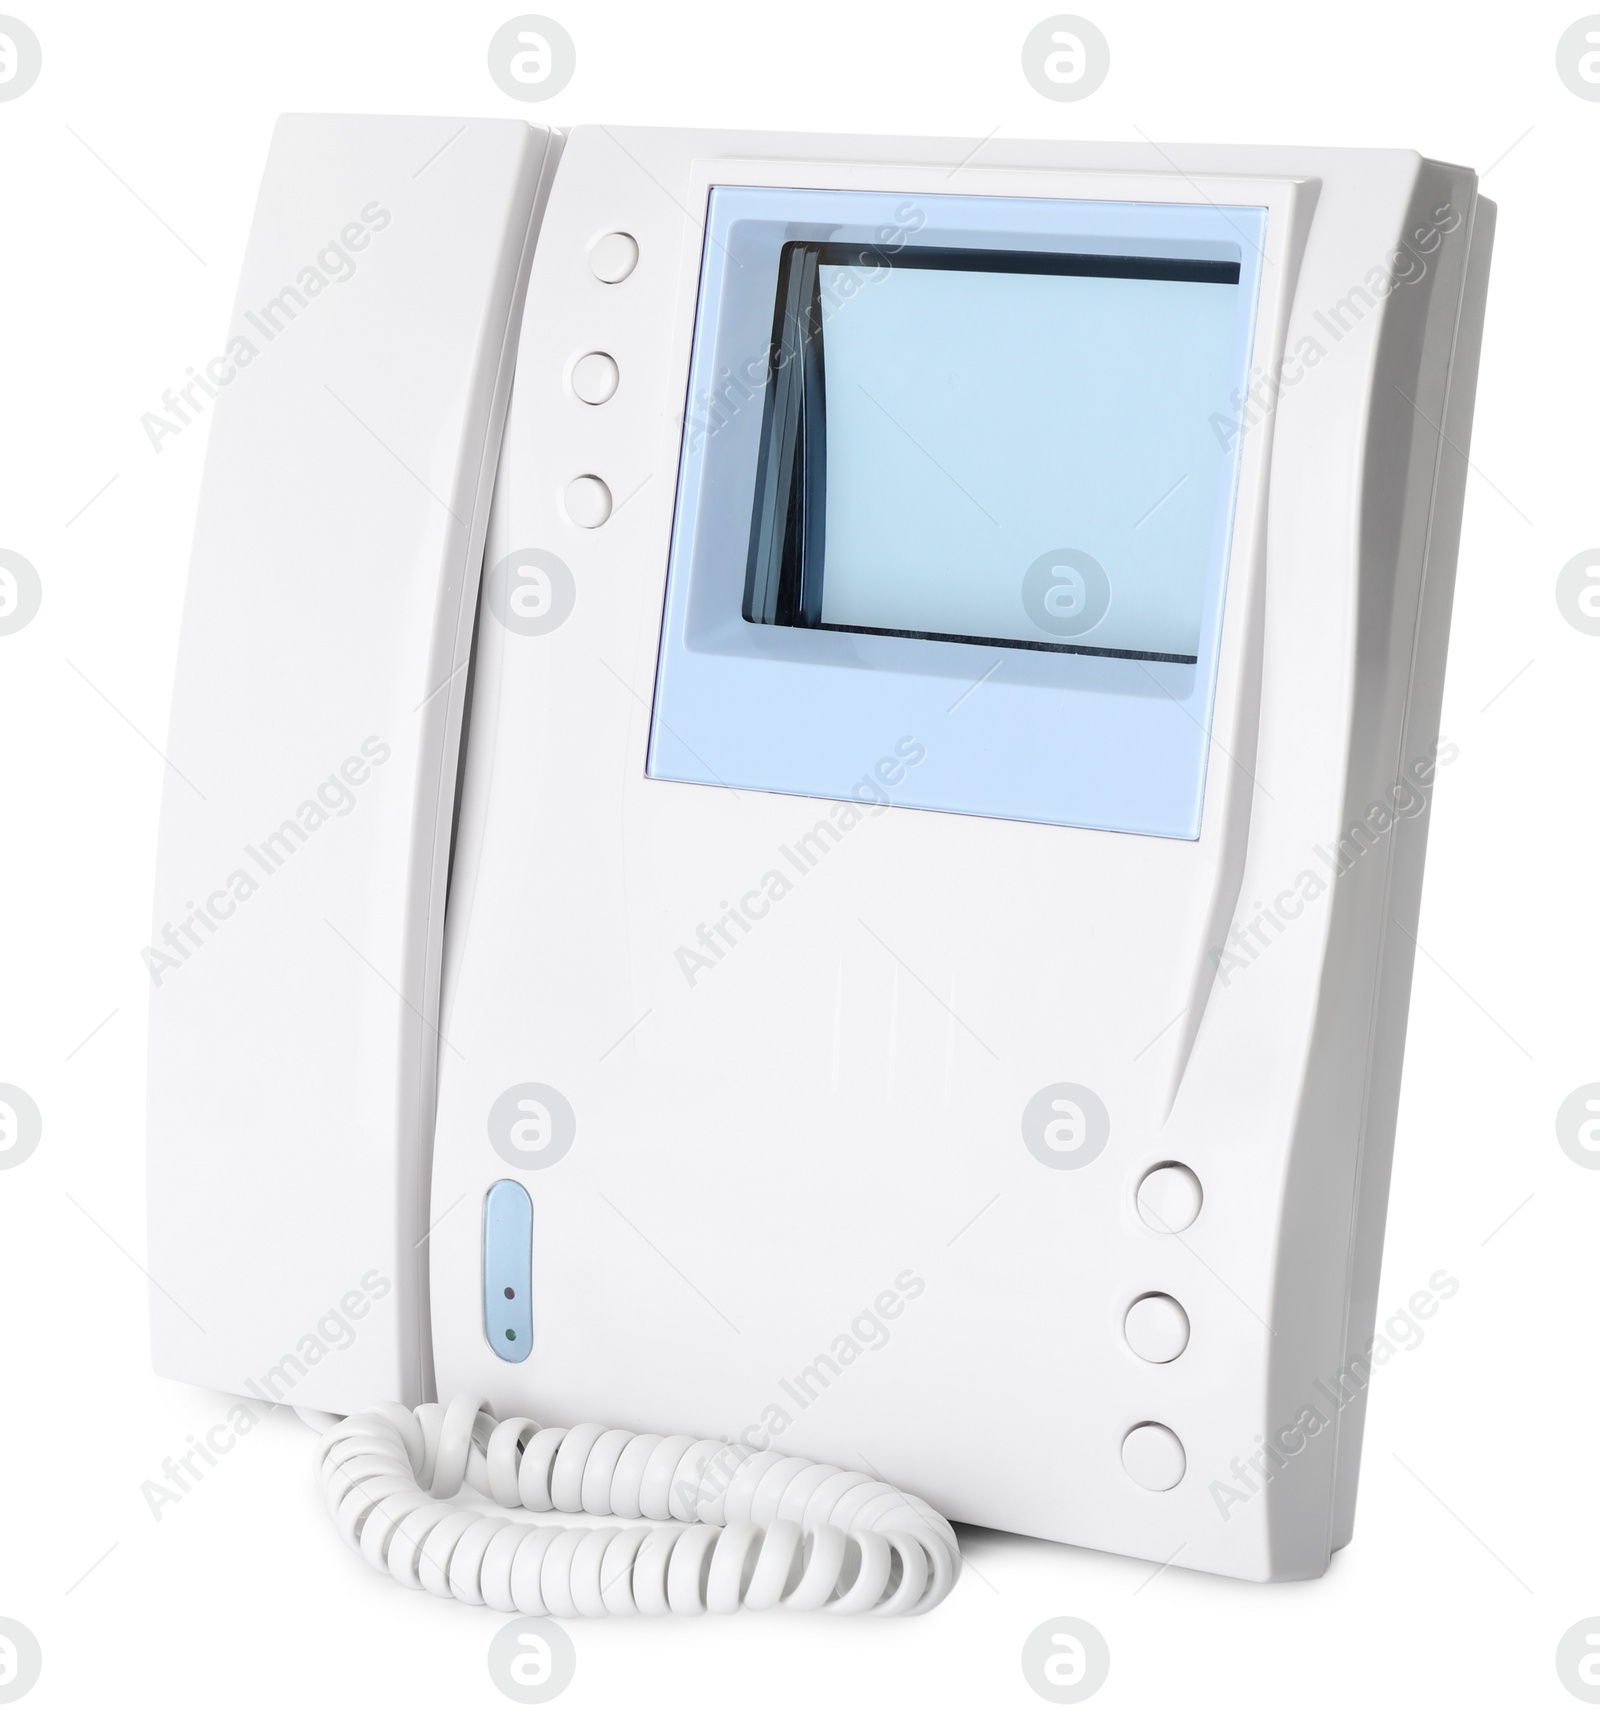 Photo of Intercom base station with handset isolated on white